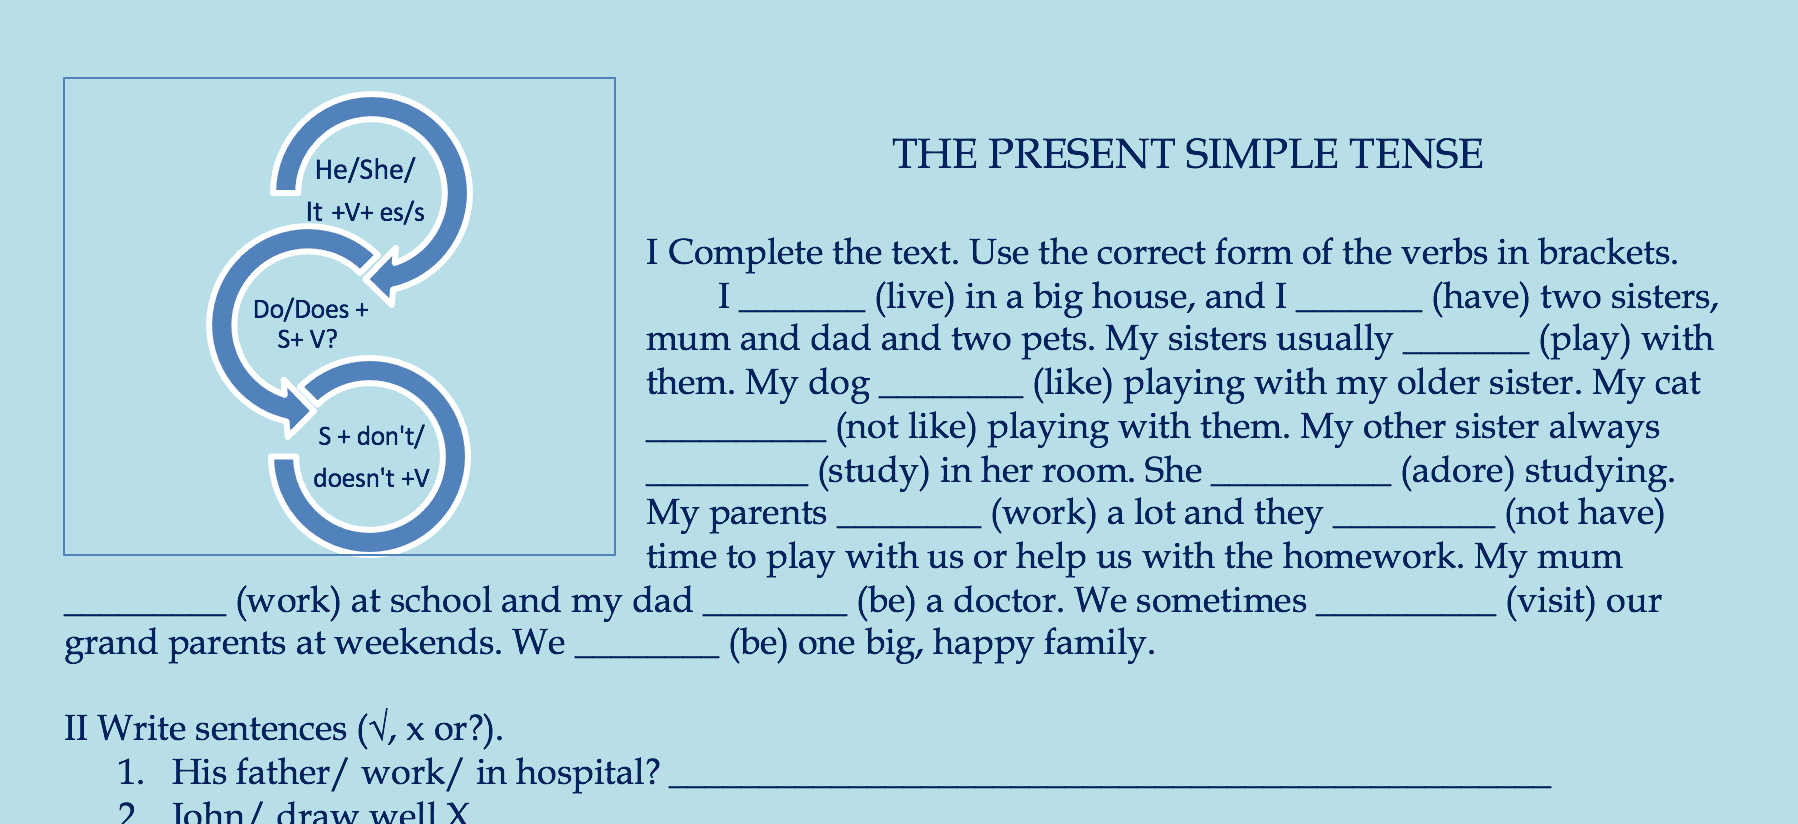 Past simple exercises 4 класс. Present simple Tense упражнения. Past simple упражнения 4 класс. Past simple adverbs. Present simple text.